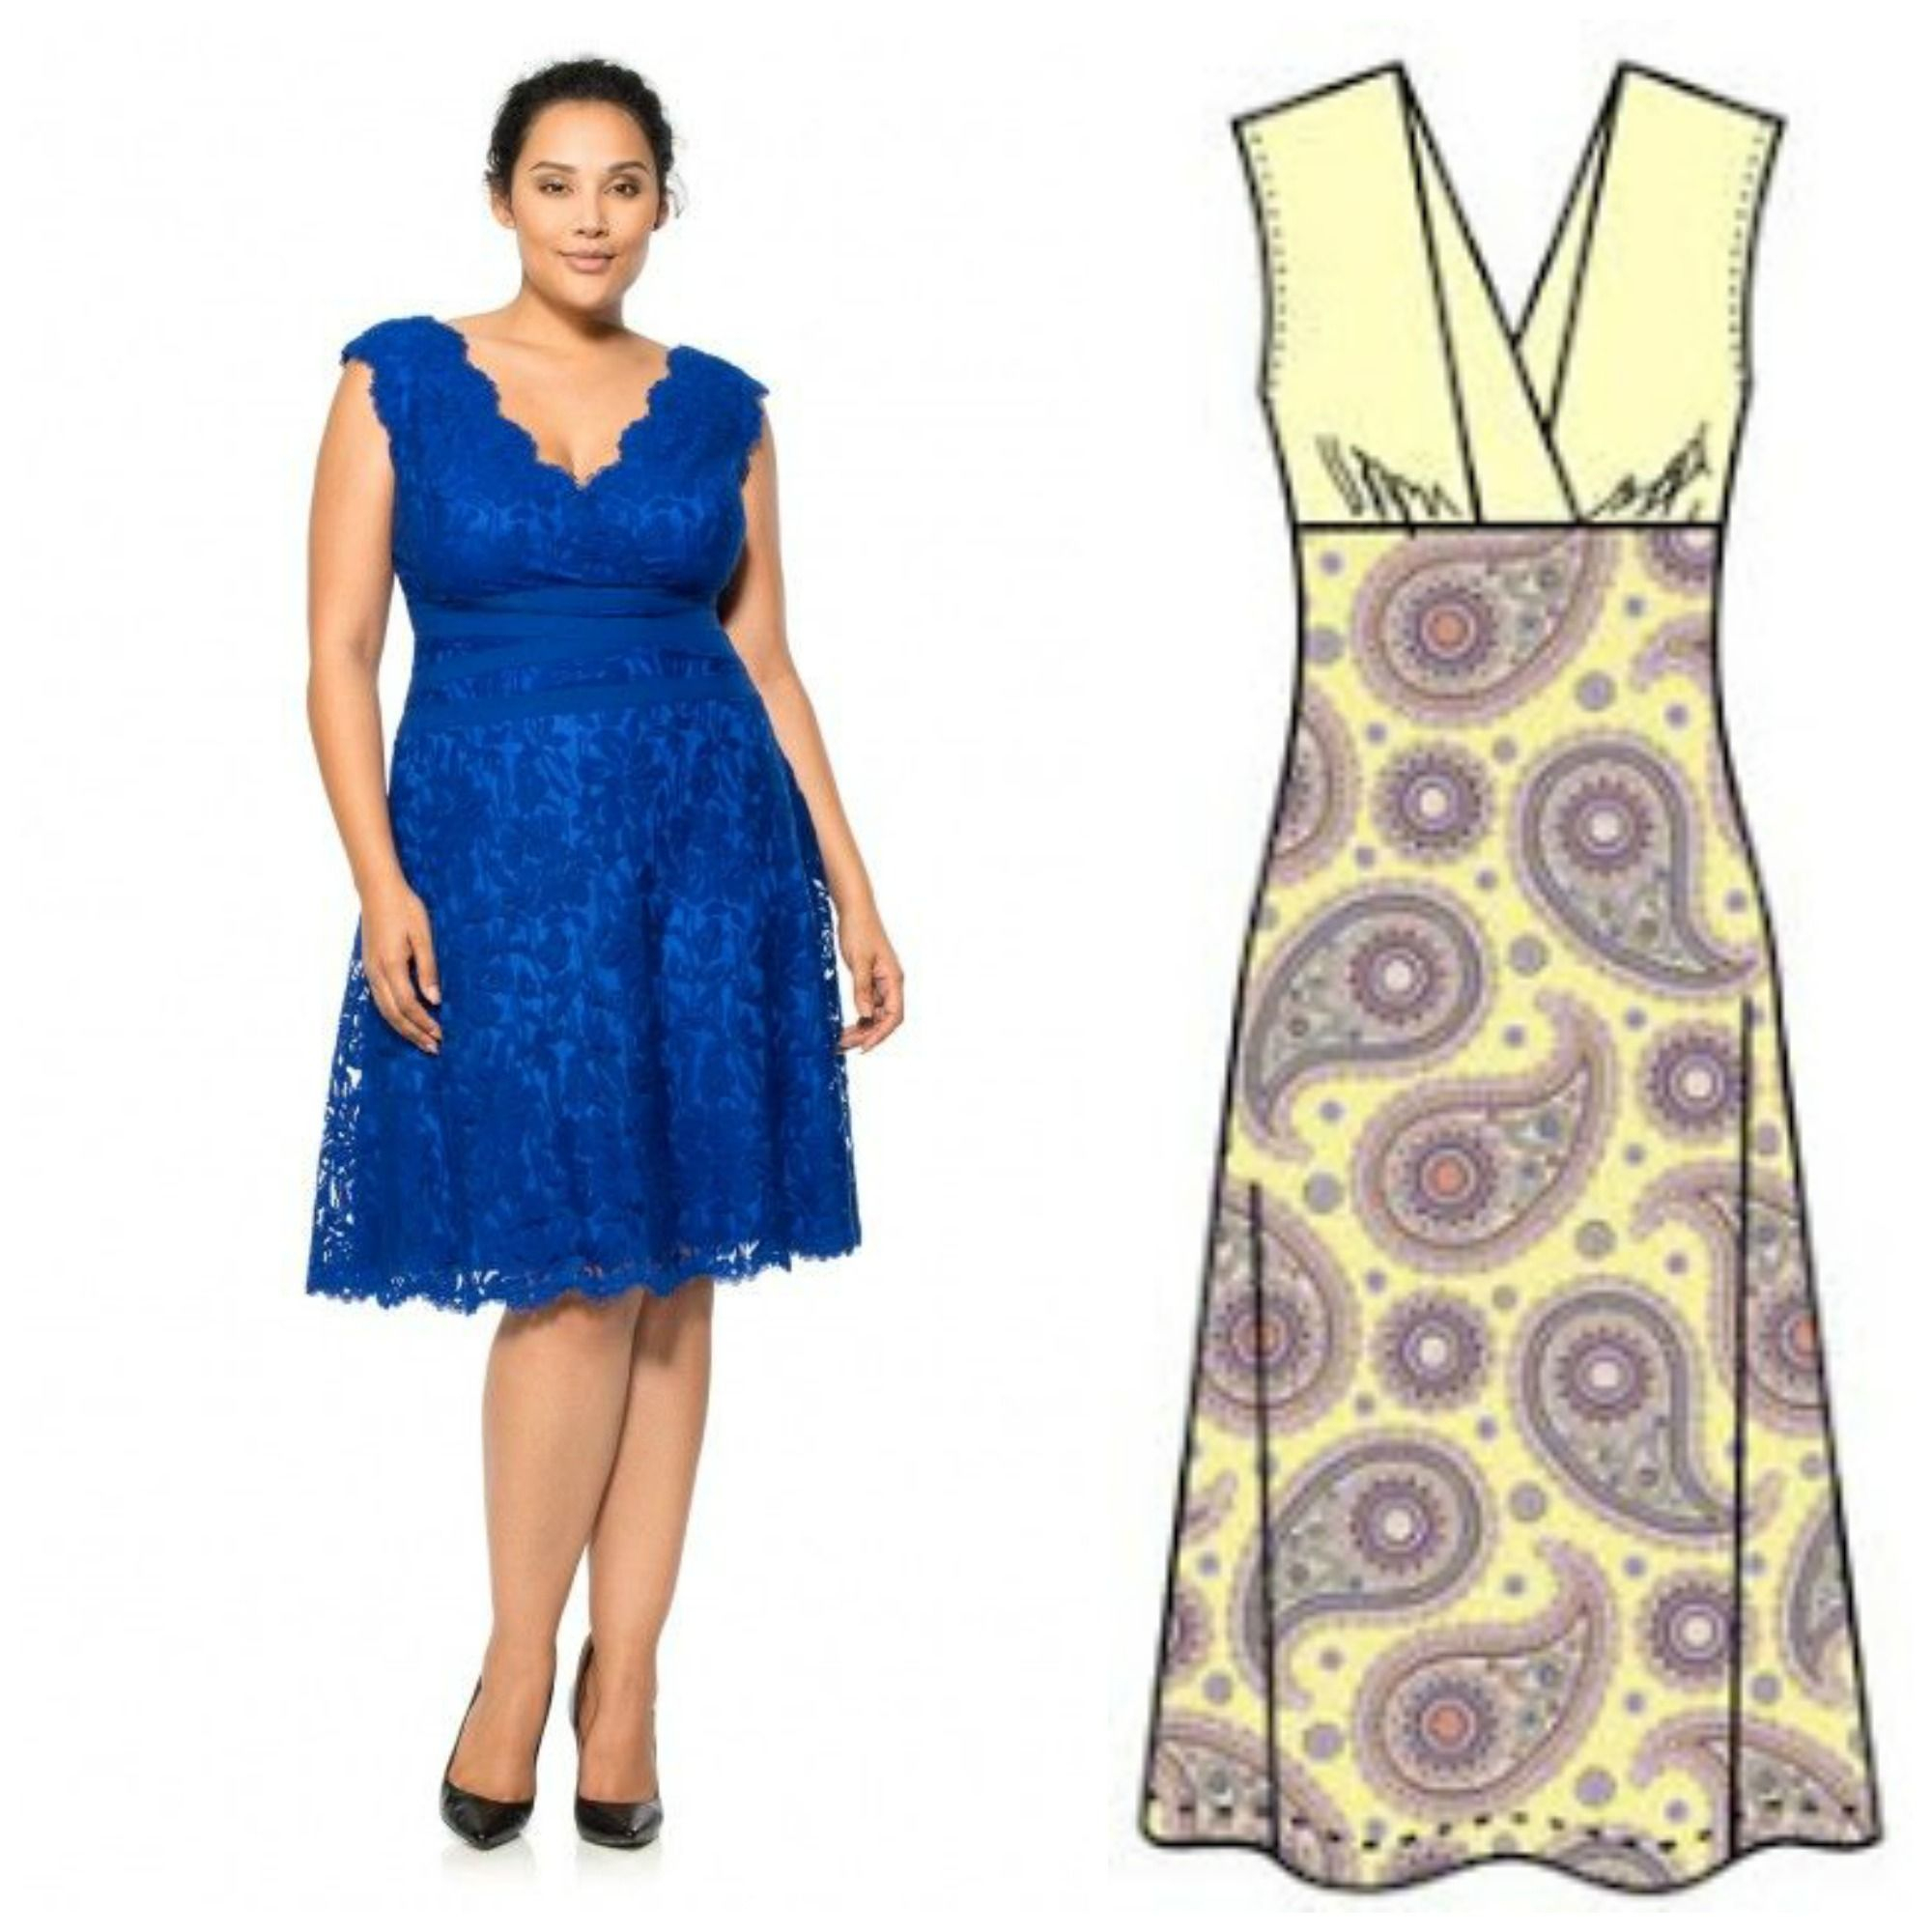 V Neck Dress Pattern Free | Sew | Pinterest | Sewing Patterns - Free Printable Plus Size Sewing Patterns